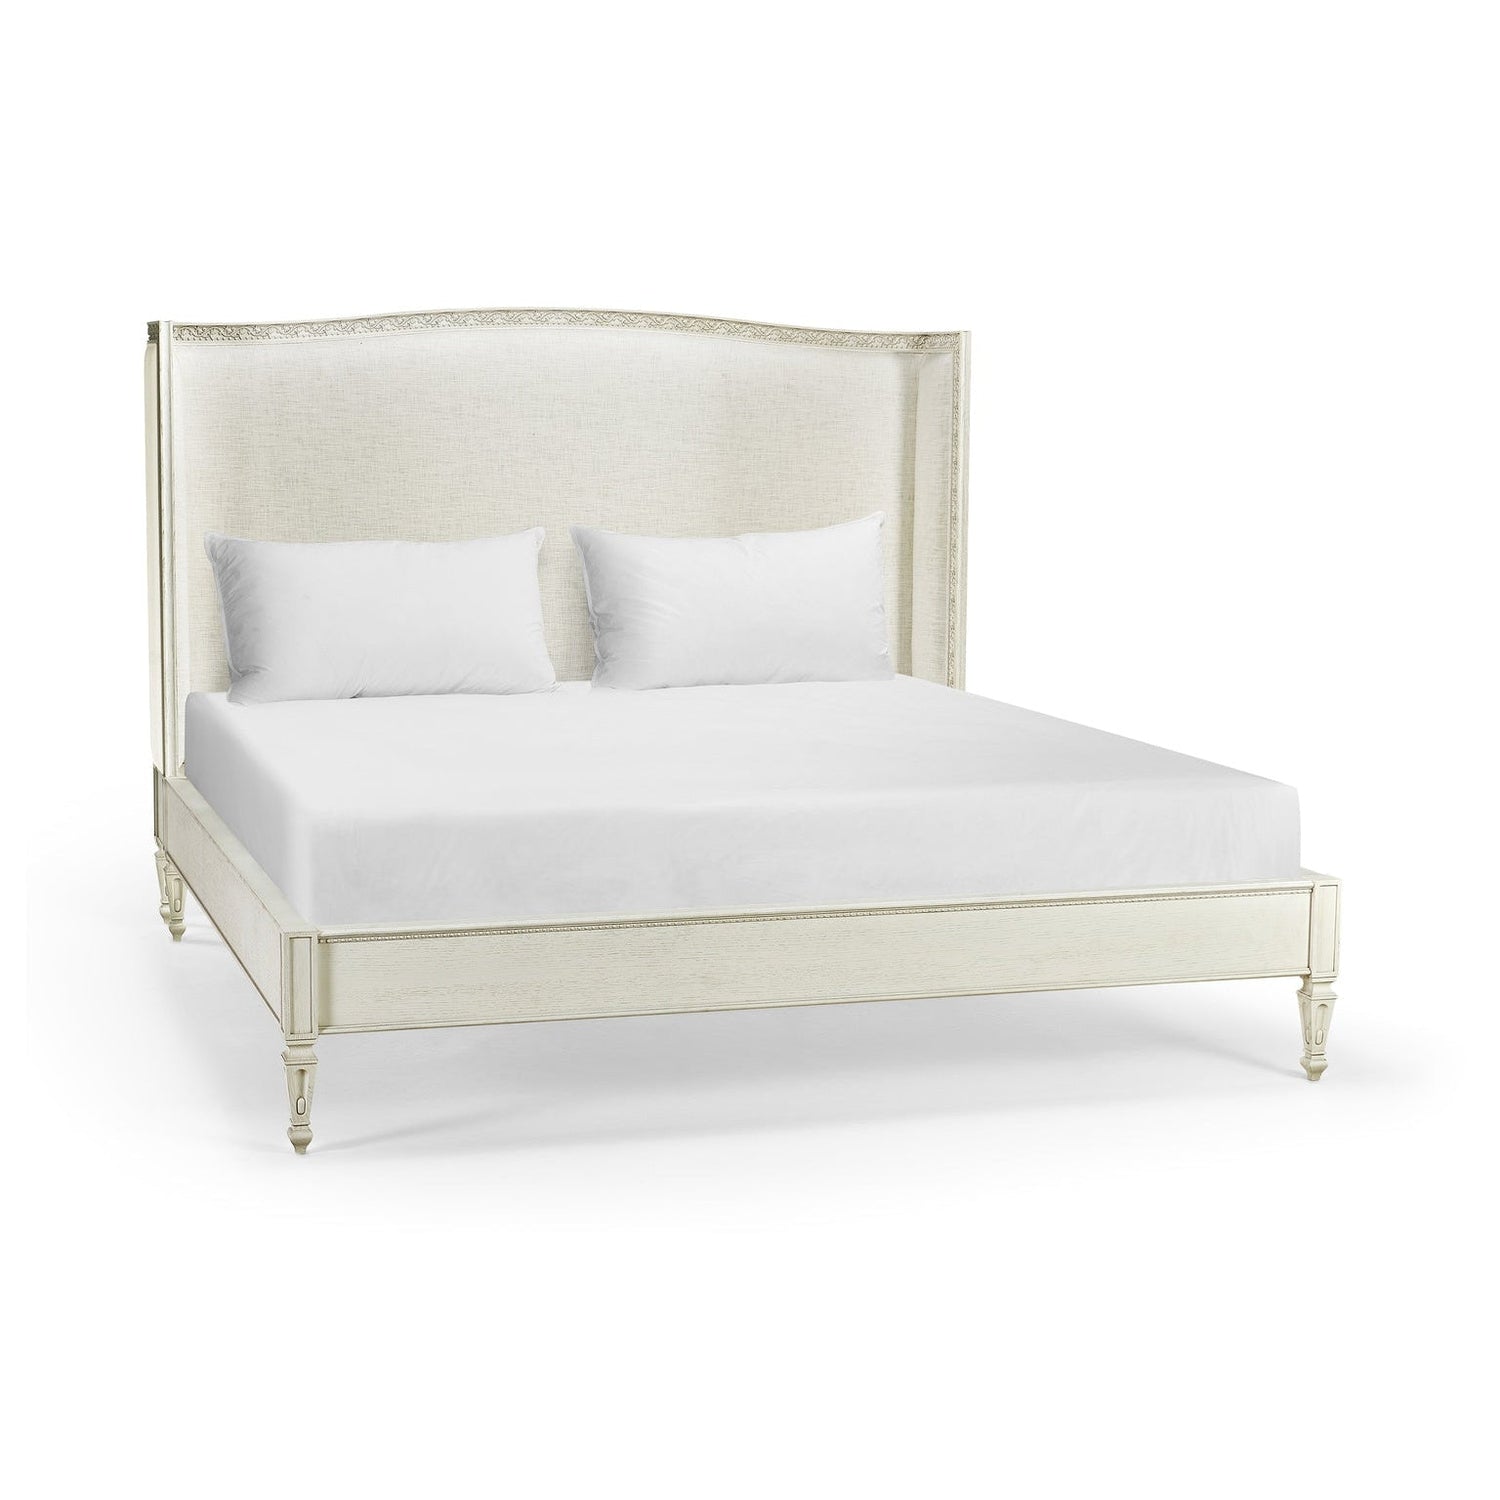 Antisolar Upholstered Shelter King Bed-Jonathan Charles-JCHARLES-002-1-130-CHK-Beds-1-France and Son